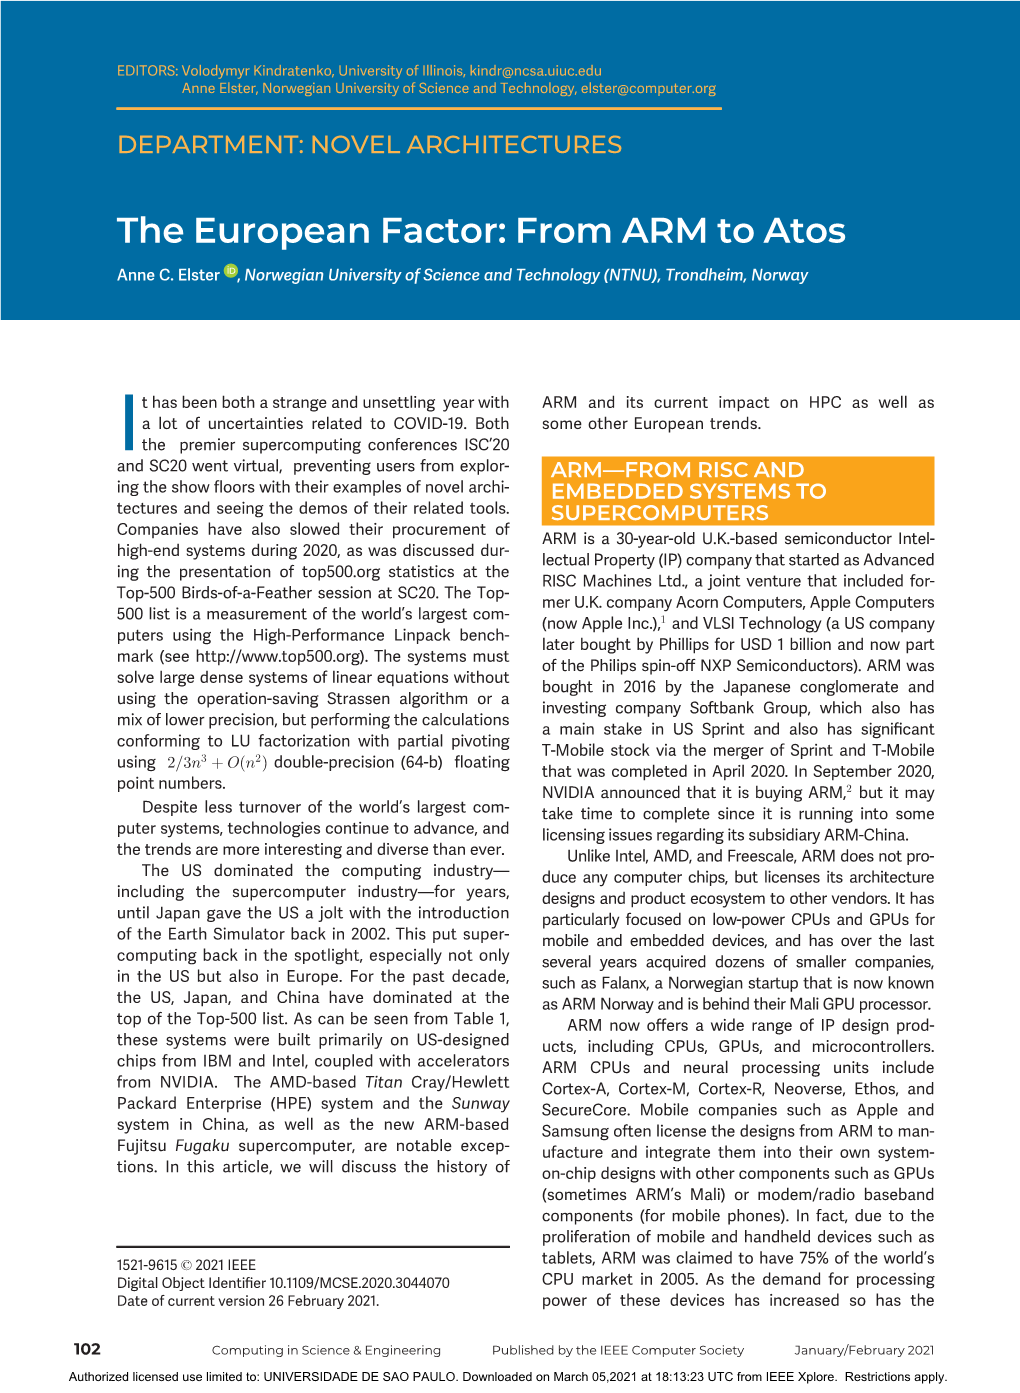 The European Factor: from ARM to Atos